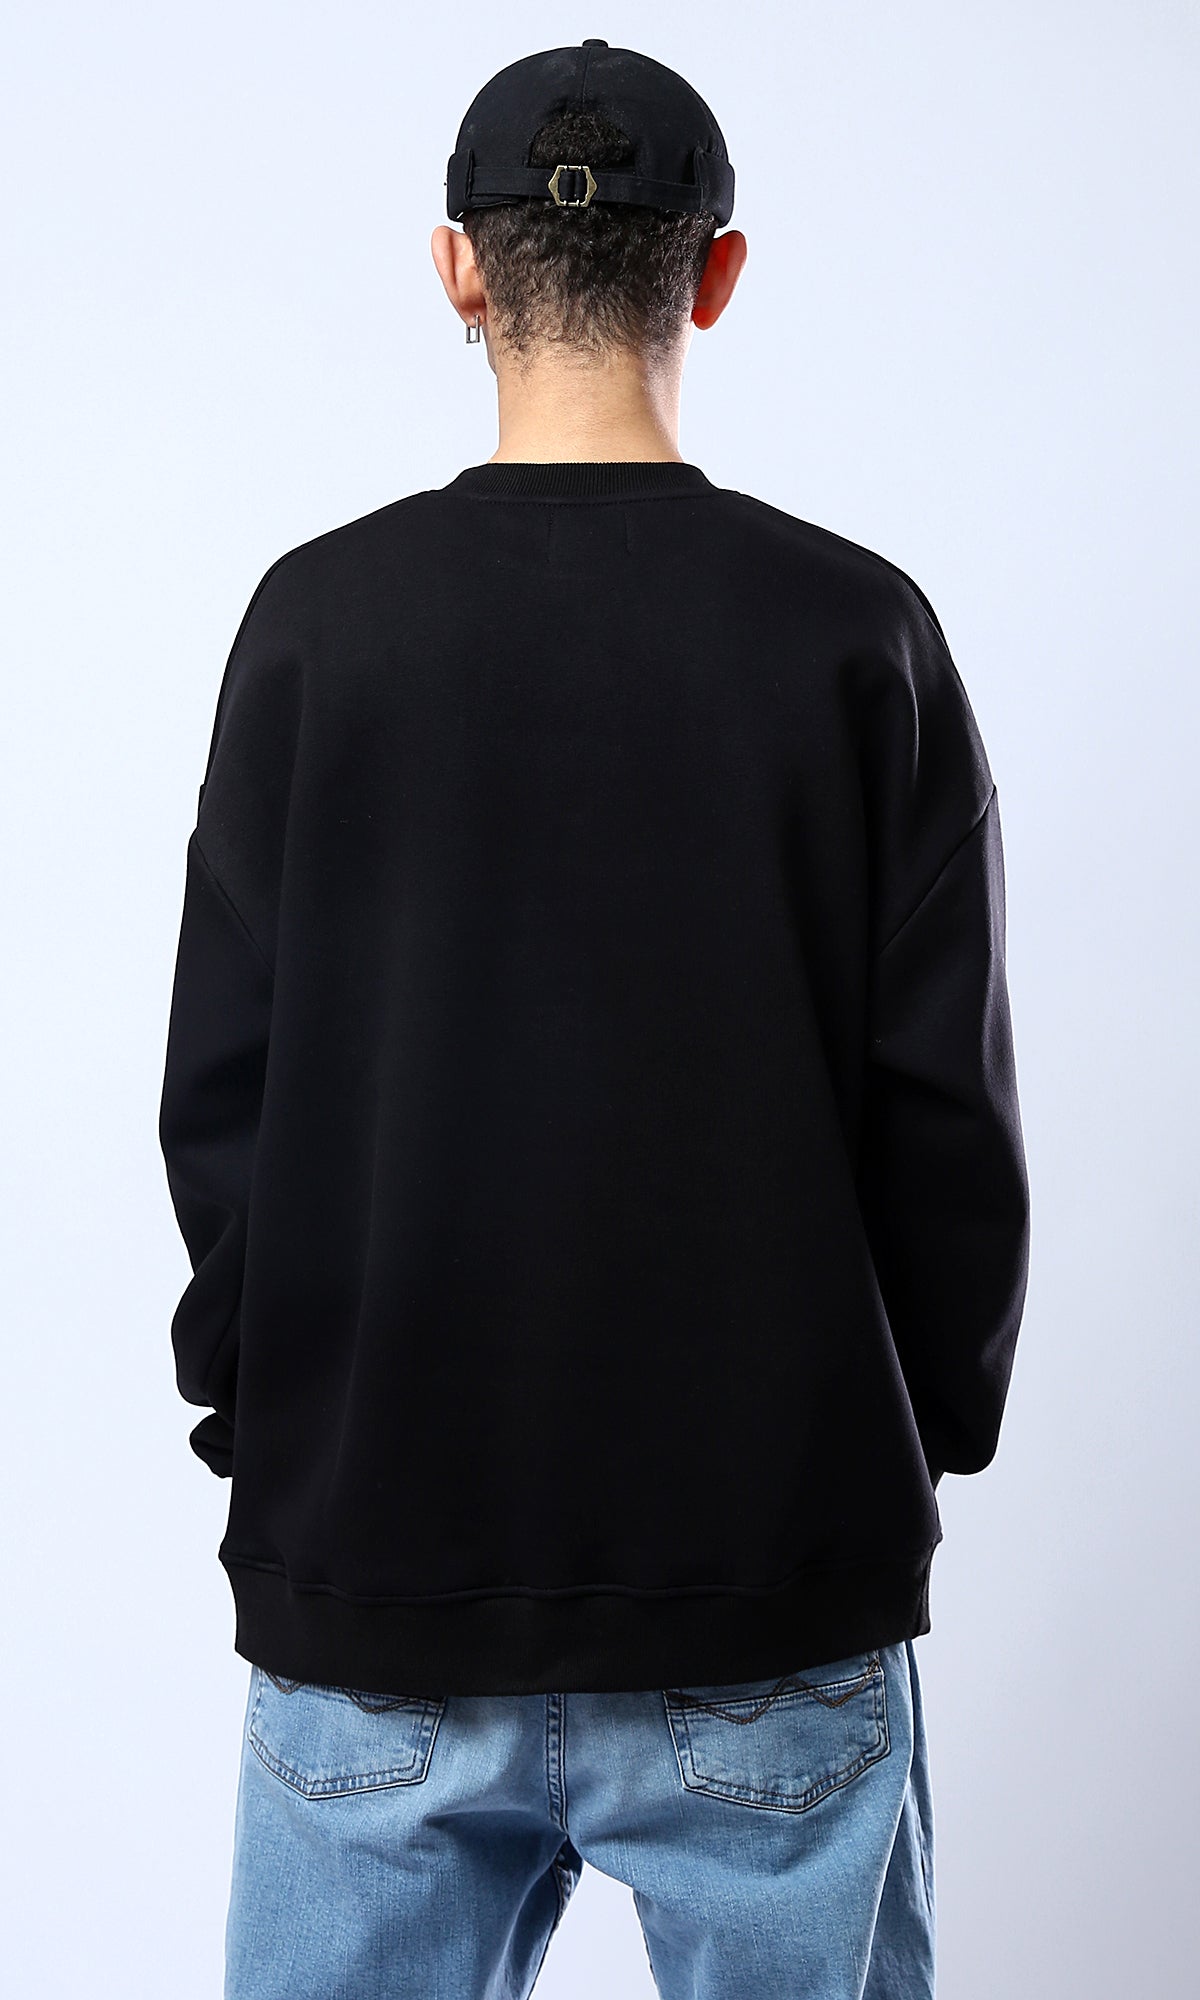 O175667 Black Round Neck Sweatshirt With Front Pocket